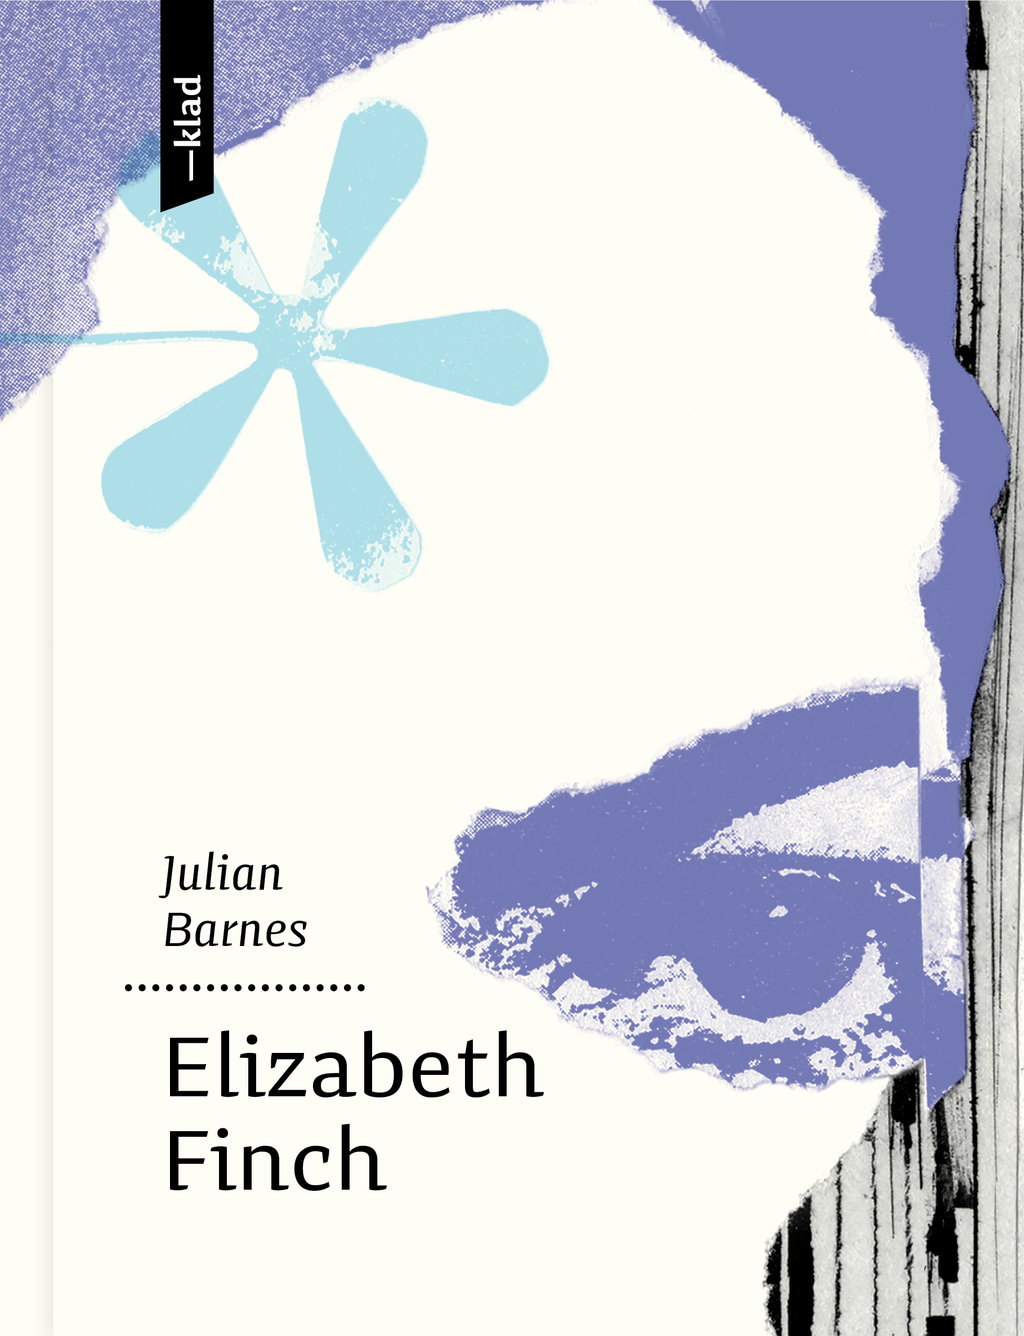 Livro de Maio: Elizabeth Finch, de Julian Barnes